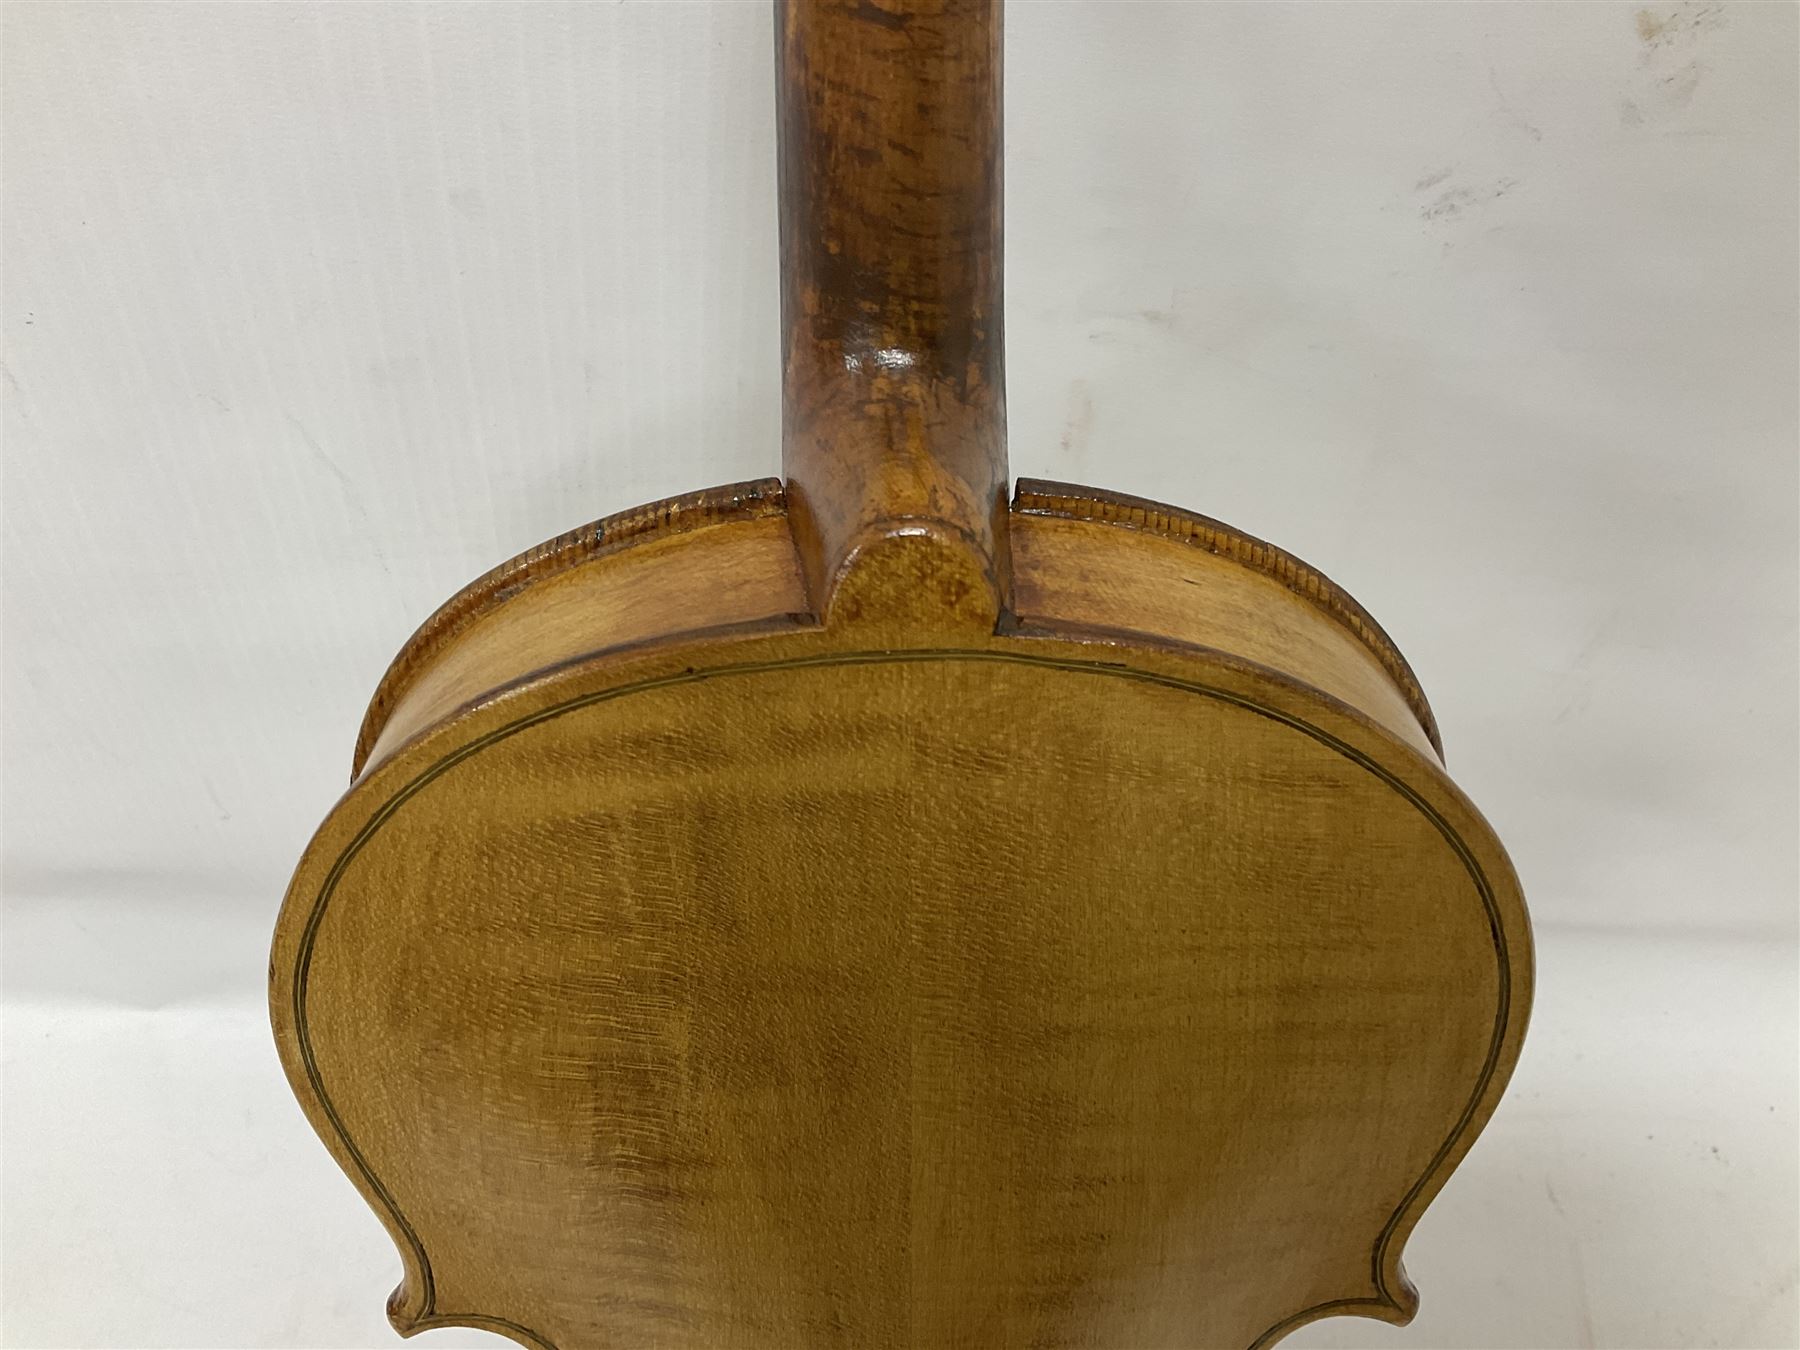 Copy of a full size Stradivarius violin - Image 10 of 12